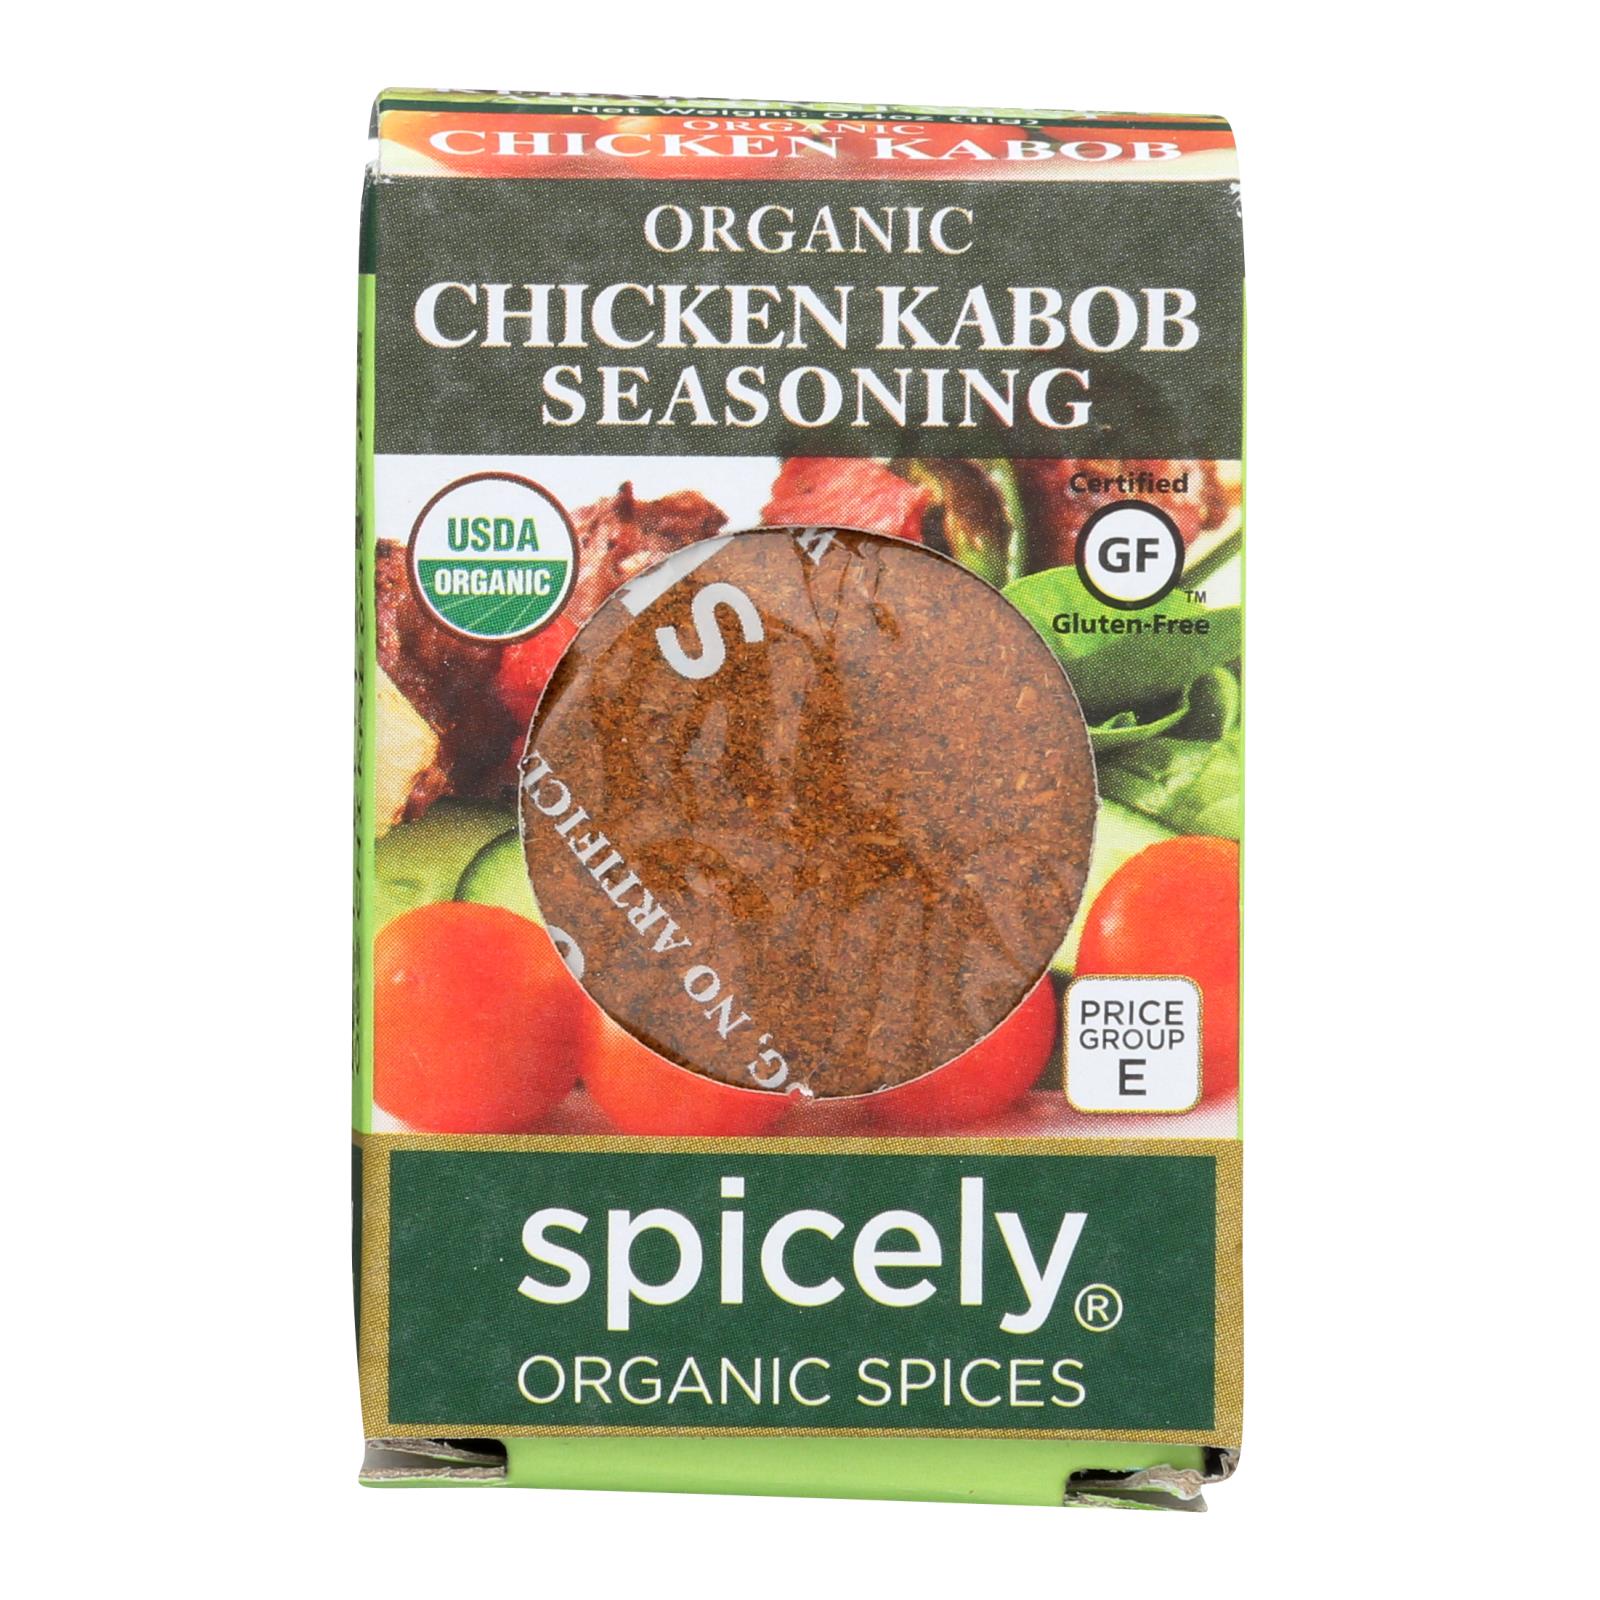 Spicely Organics - Organic Chicken Kabob Seasoning - 6개 묶음상품 - 0.4 oz.